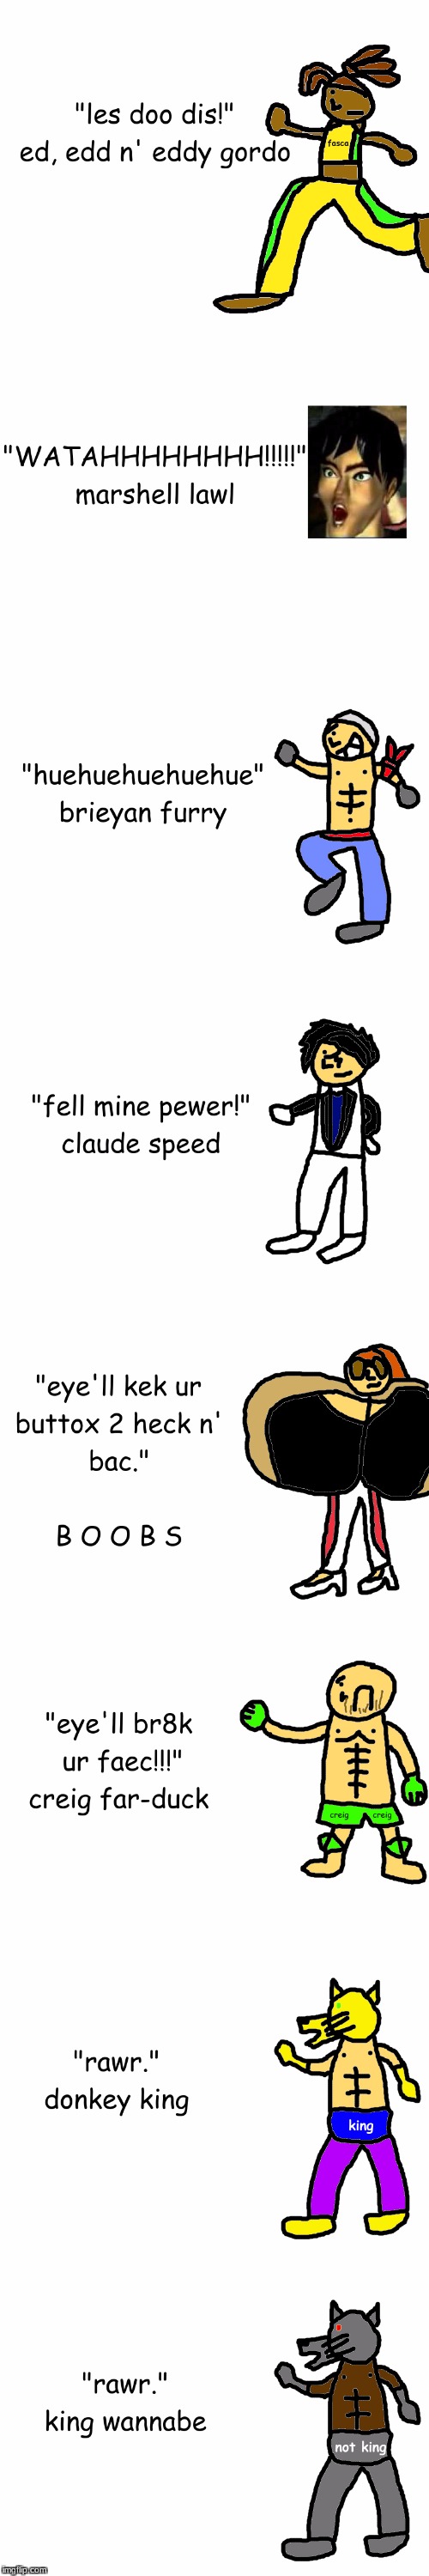 Poorly Drawn Tekken (Part 2) | image tagged in tekken,poorly drawn,part 2,memes,funny,comic sans | made w/ Imgflip meme maker